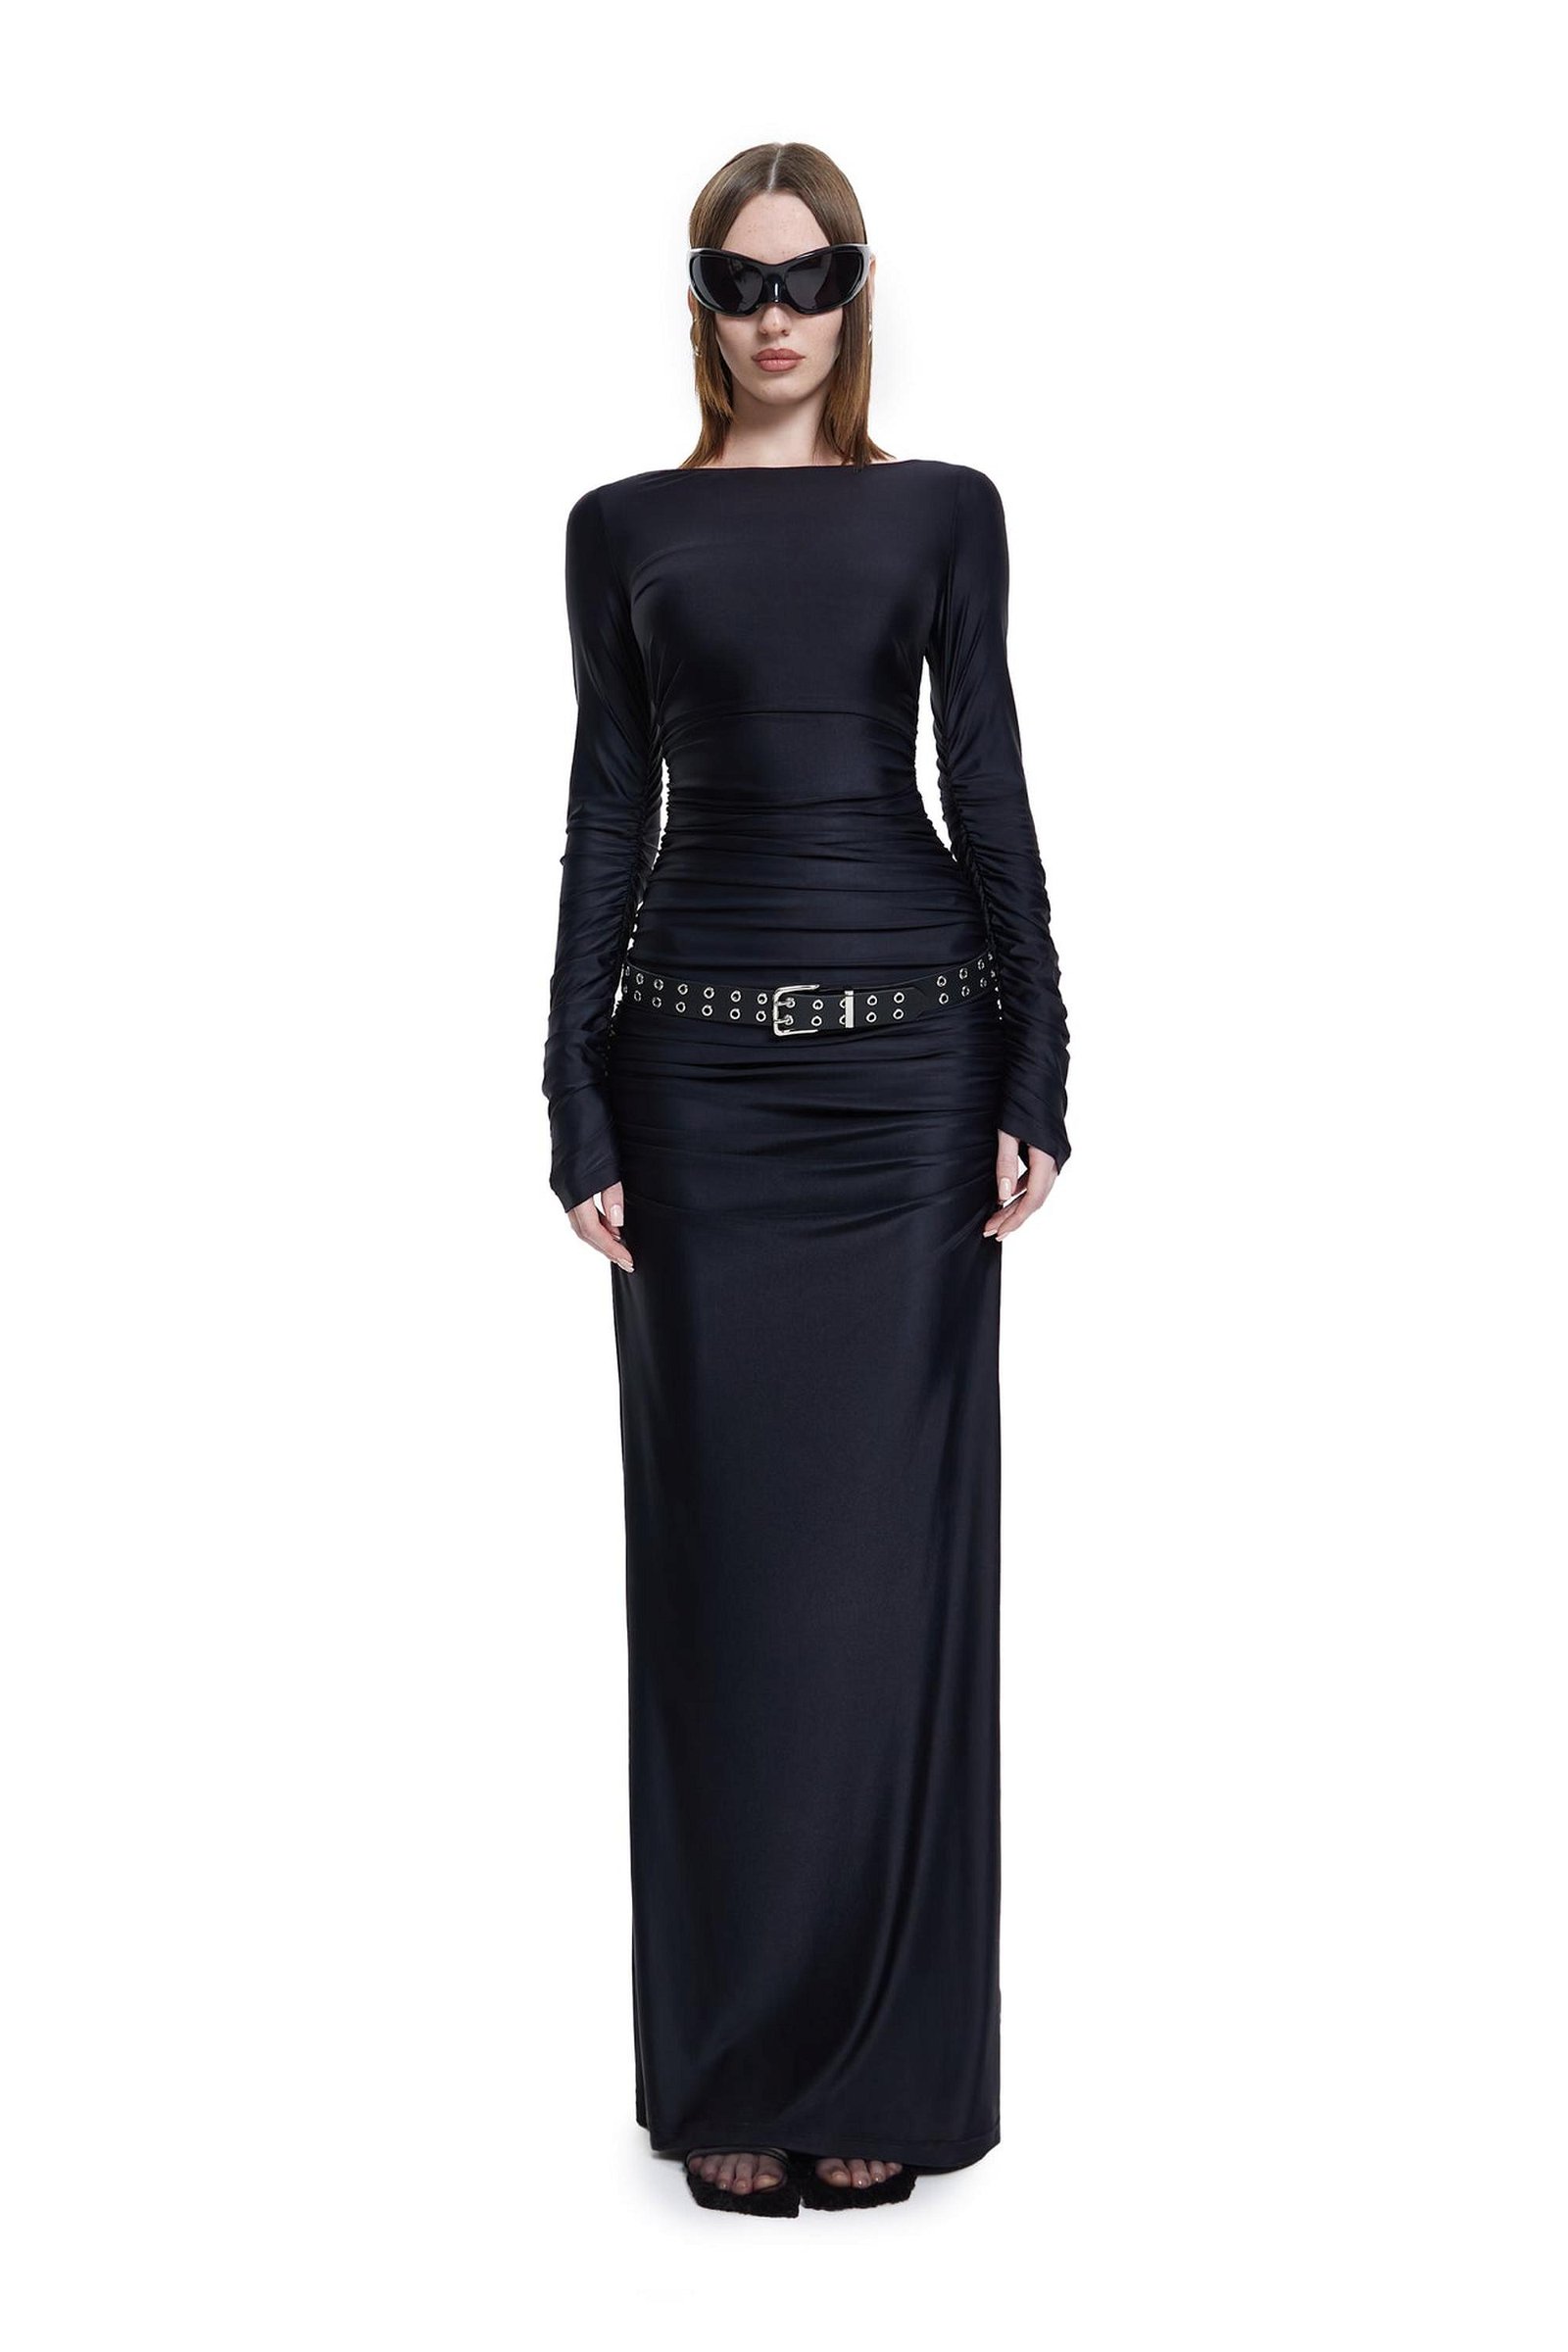 Khela The Label Kadın Sentient Elbise Siyah